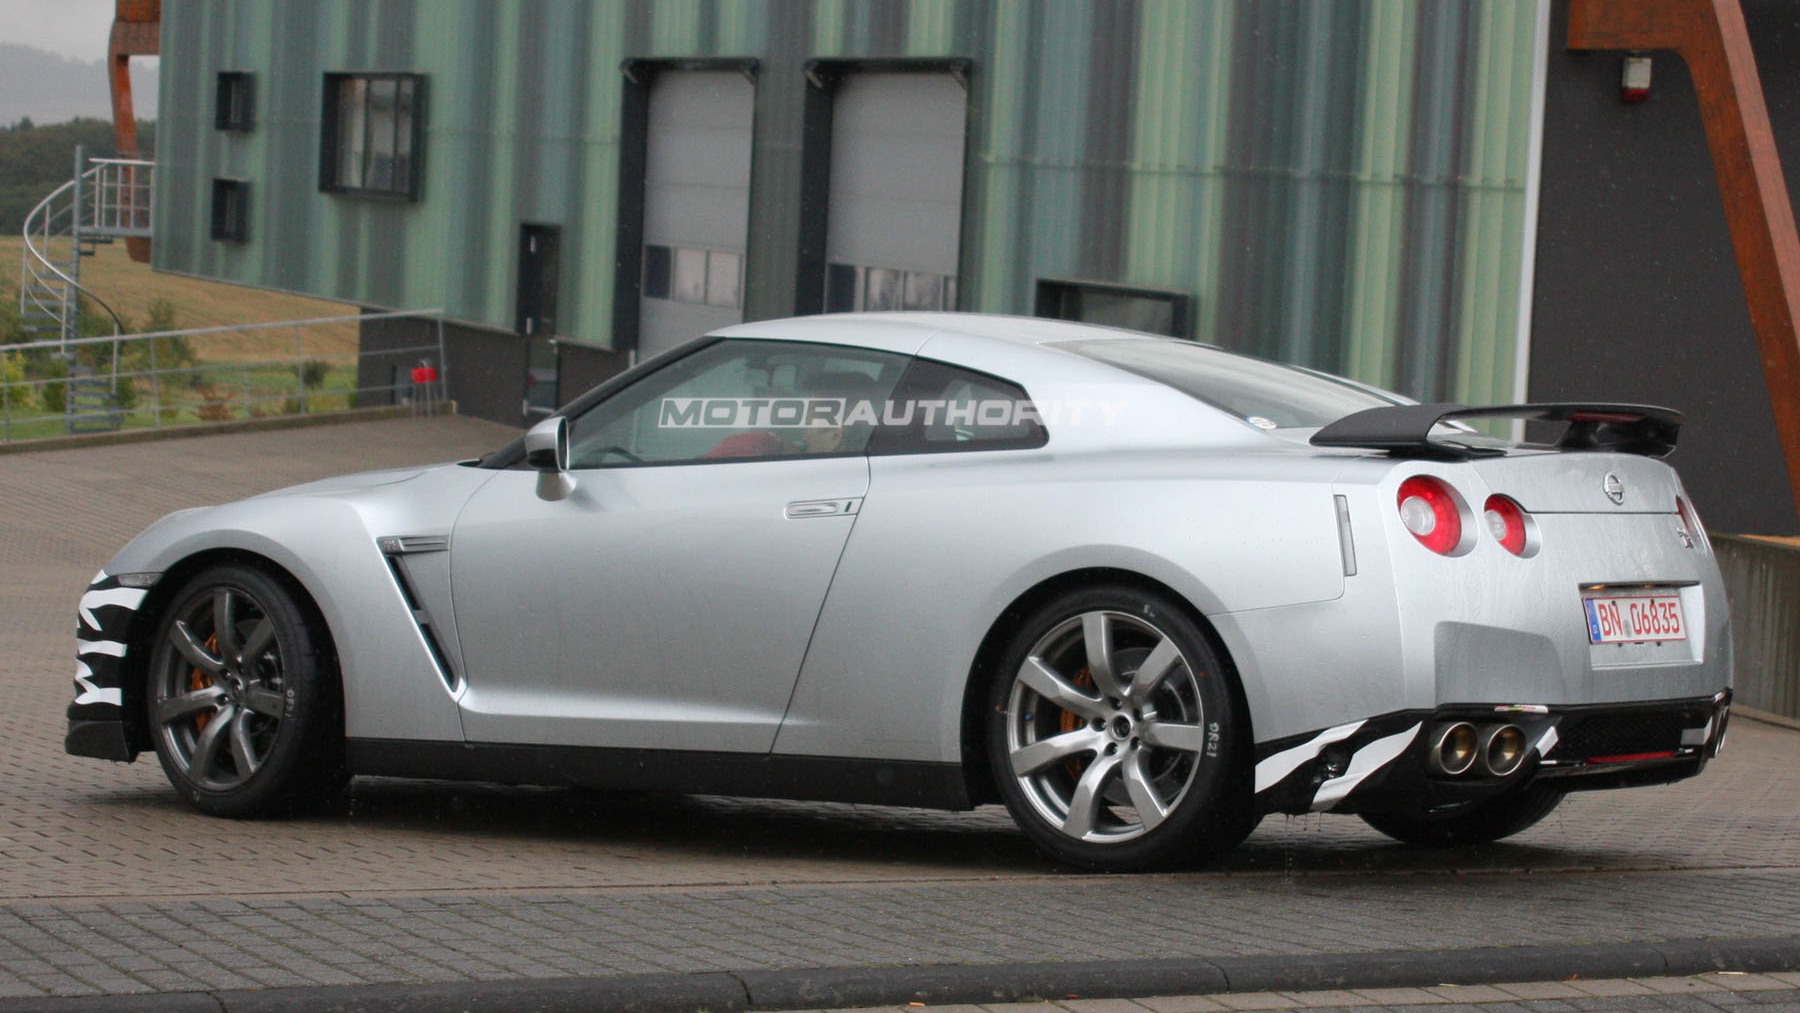 2011 Nissan GT-R SpecM spy shots